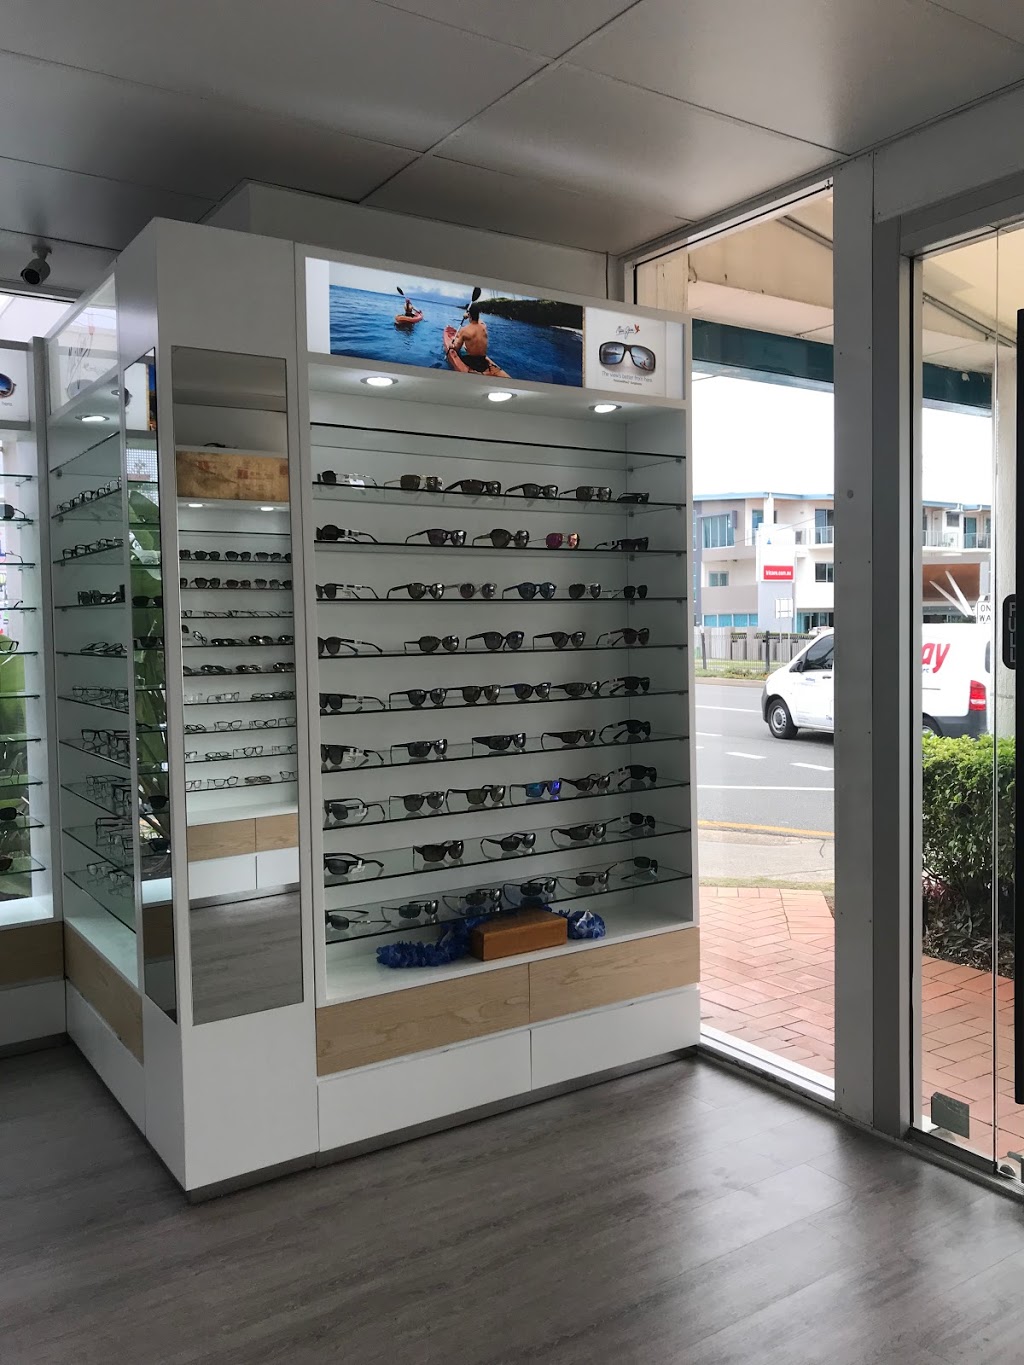 Eyecare Plus Optometrists Mermaid Beach | Shop 3A/2431 Gold Coast Hwy, Mermaid Beach QLD 4218, Australia | Phone: (07) 5526 1400